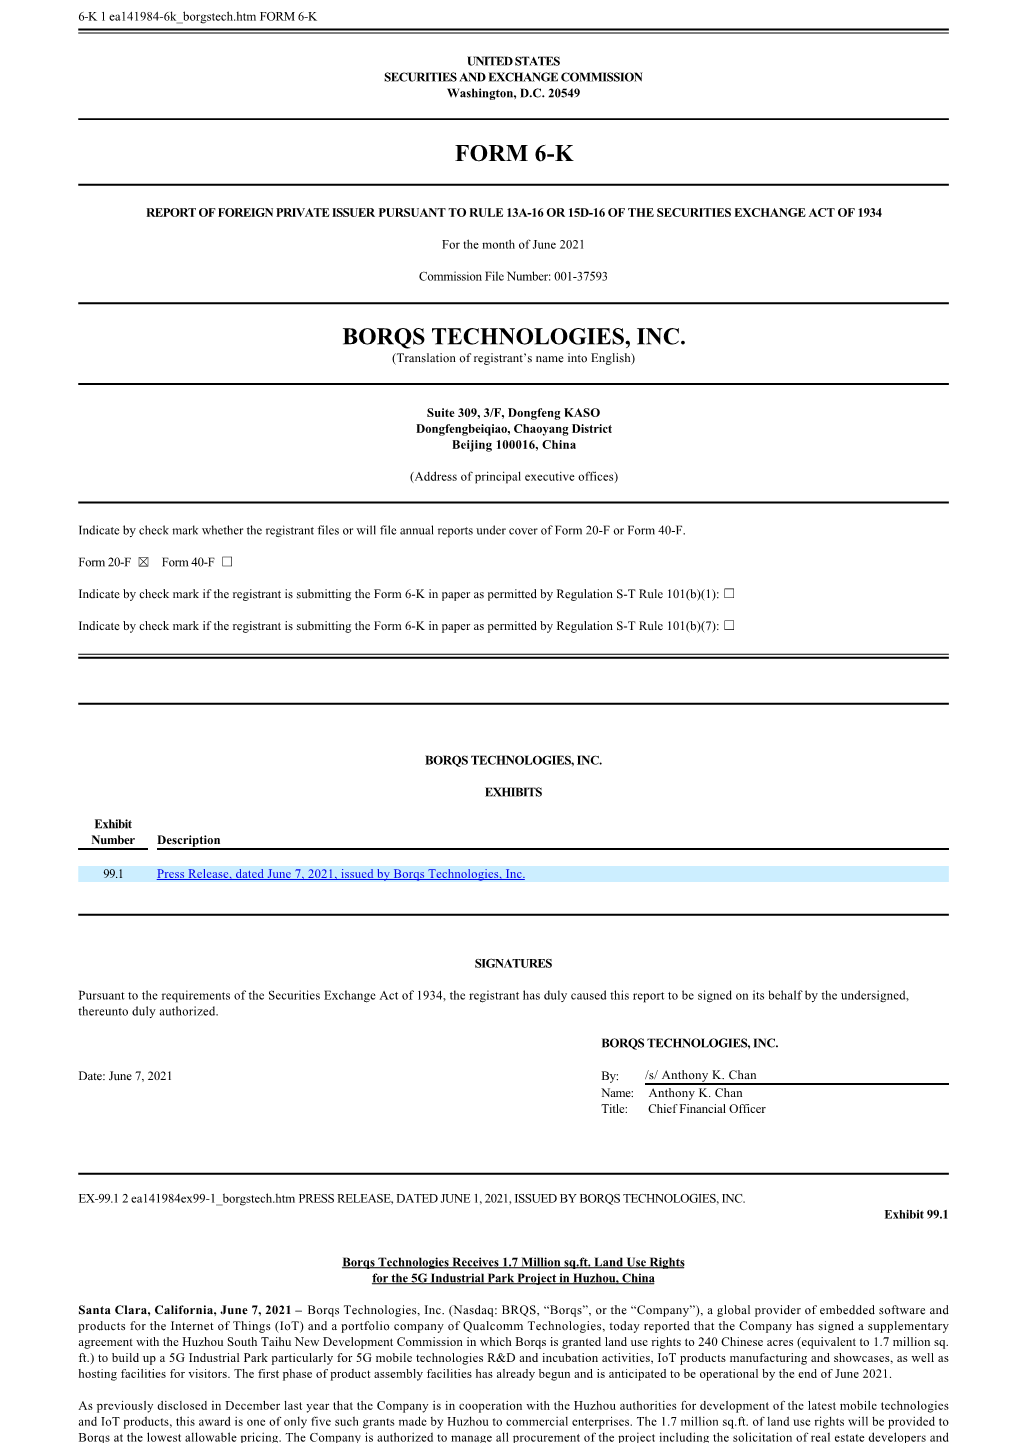 Form 6K Borqs Technologies, Inc